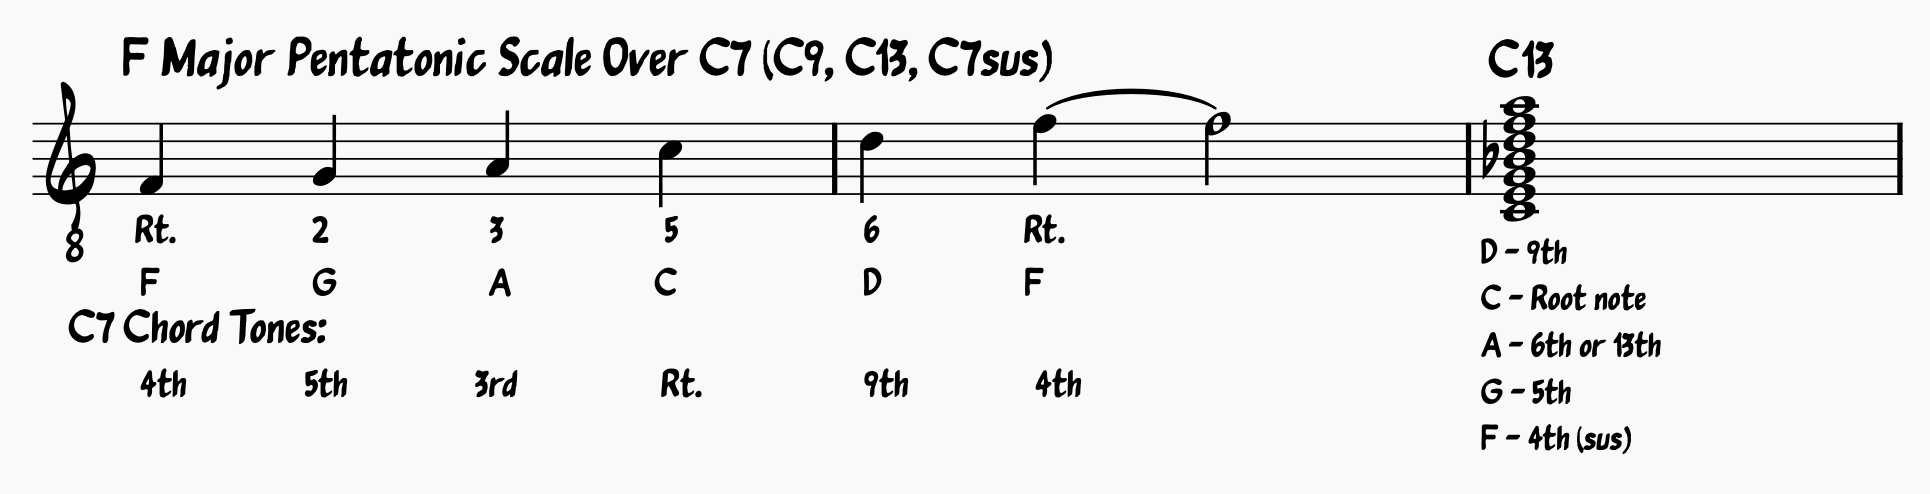 Blues Scale Guide: F Major Pentatonic Scale or D minor Pentatonic Scale over C7, C9, C13, C7sus Chords